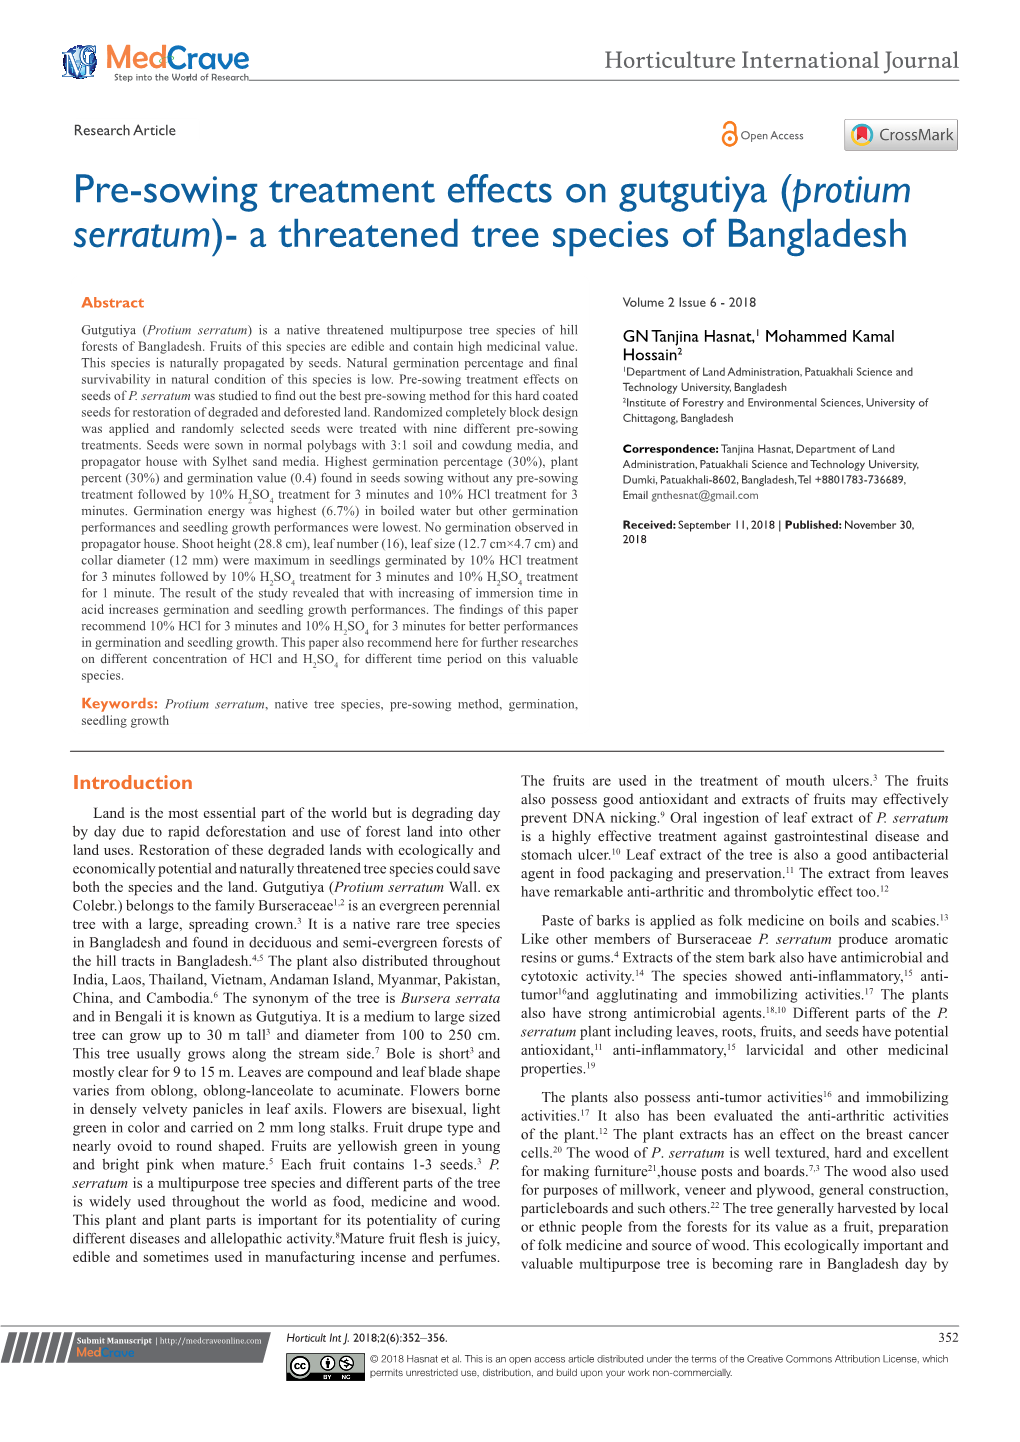 Protium Serratum)- a Threatened Tree Species of Bangladesh